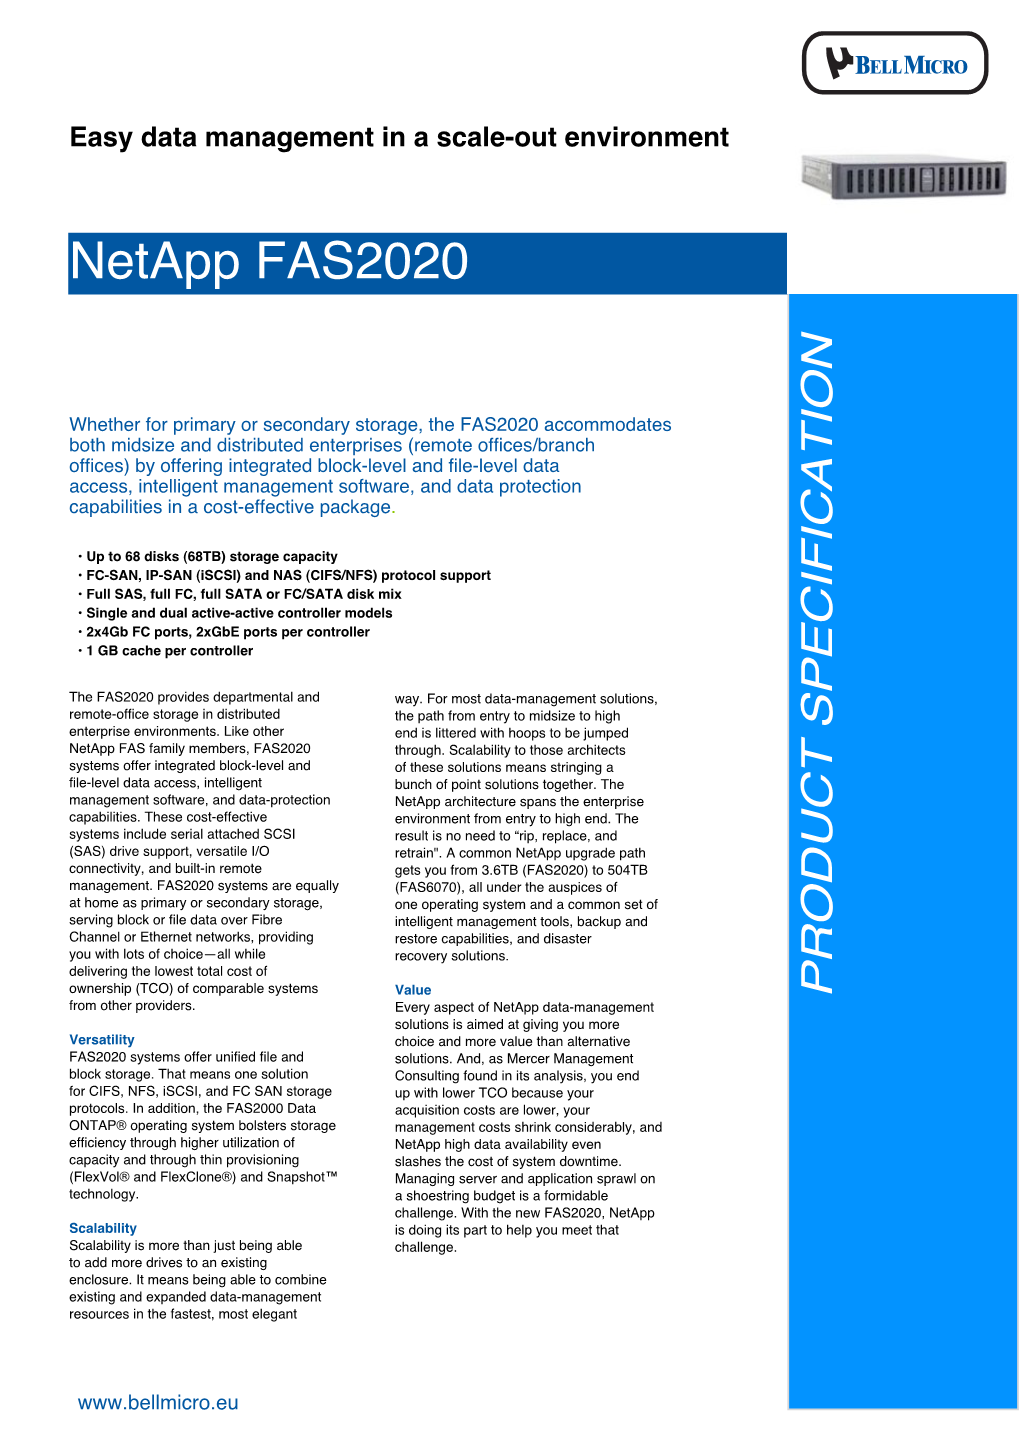 Netapp FAS2020